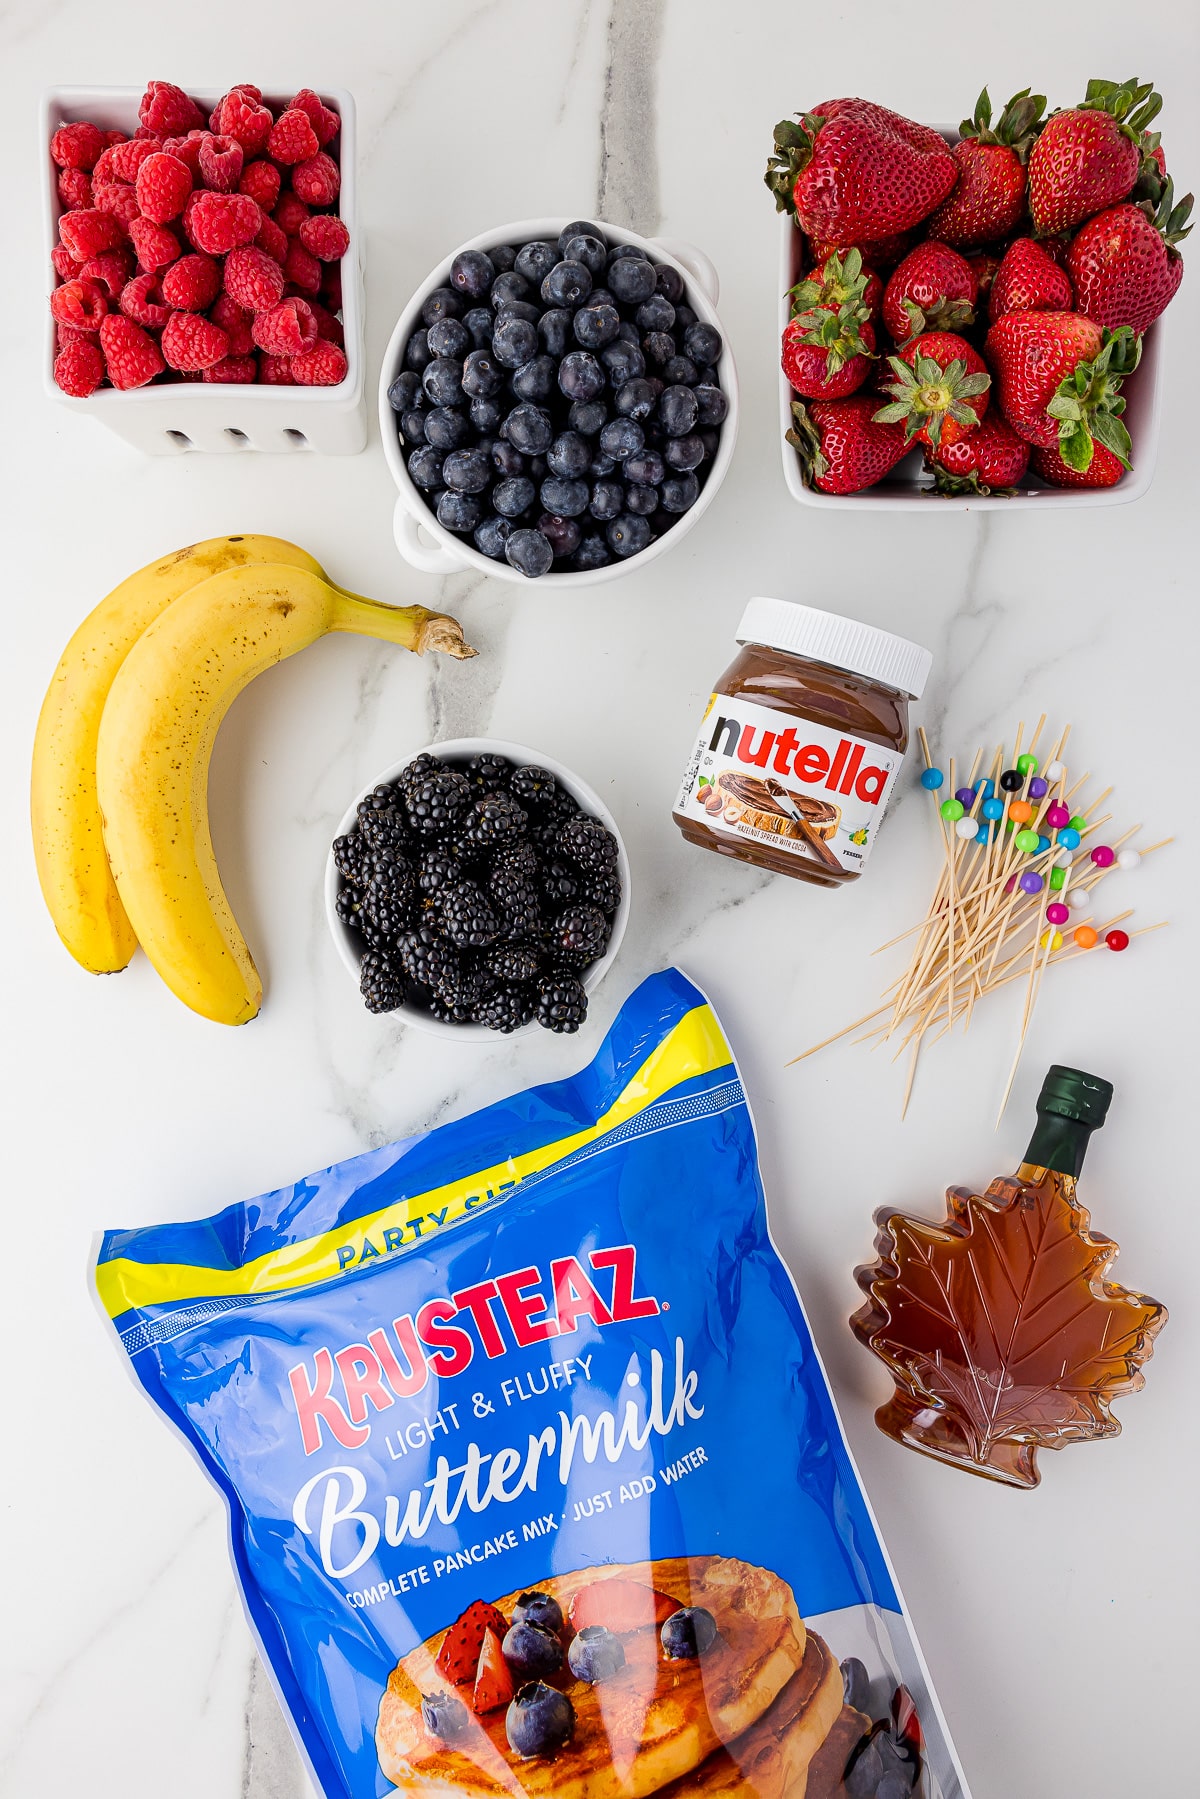 ingredients for mini pancakes including raspberries, blueberries, strawberries, bananas, blackberries, nutella, mable syrup, and Krusteaz buttermilk pancake mix